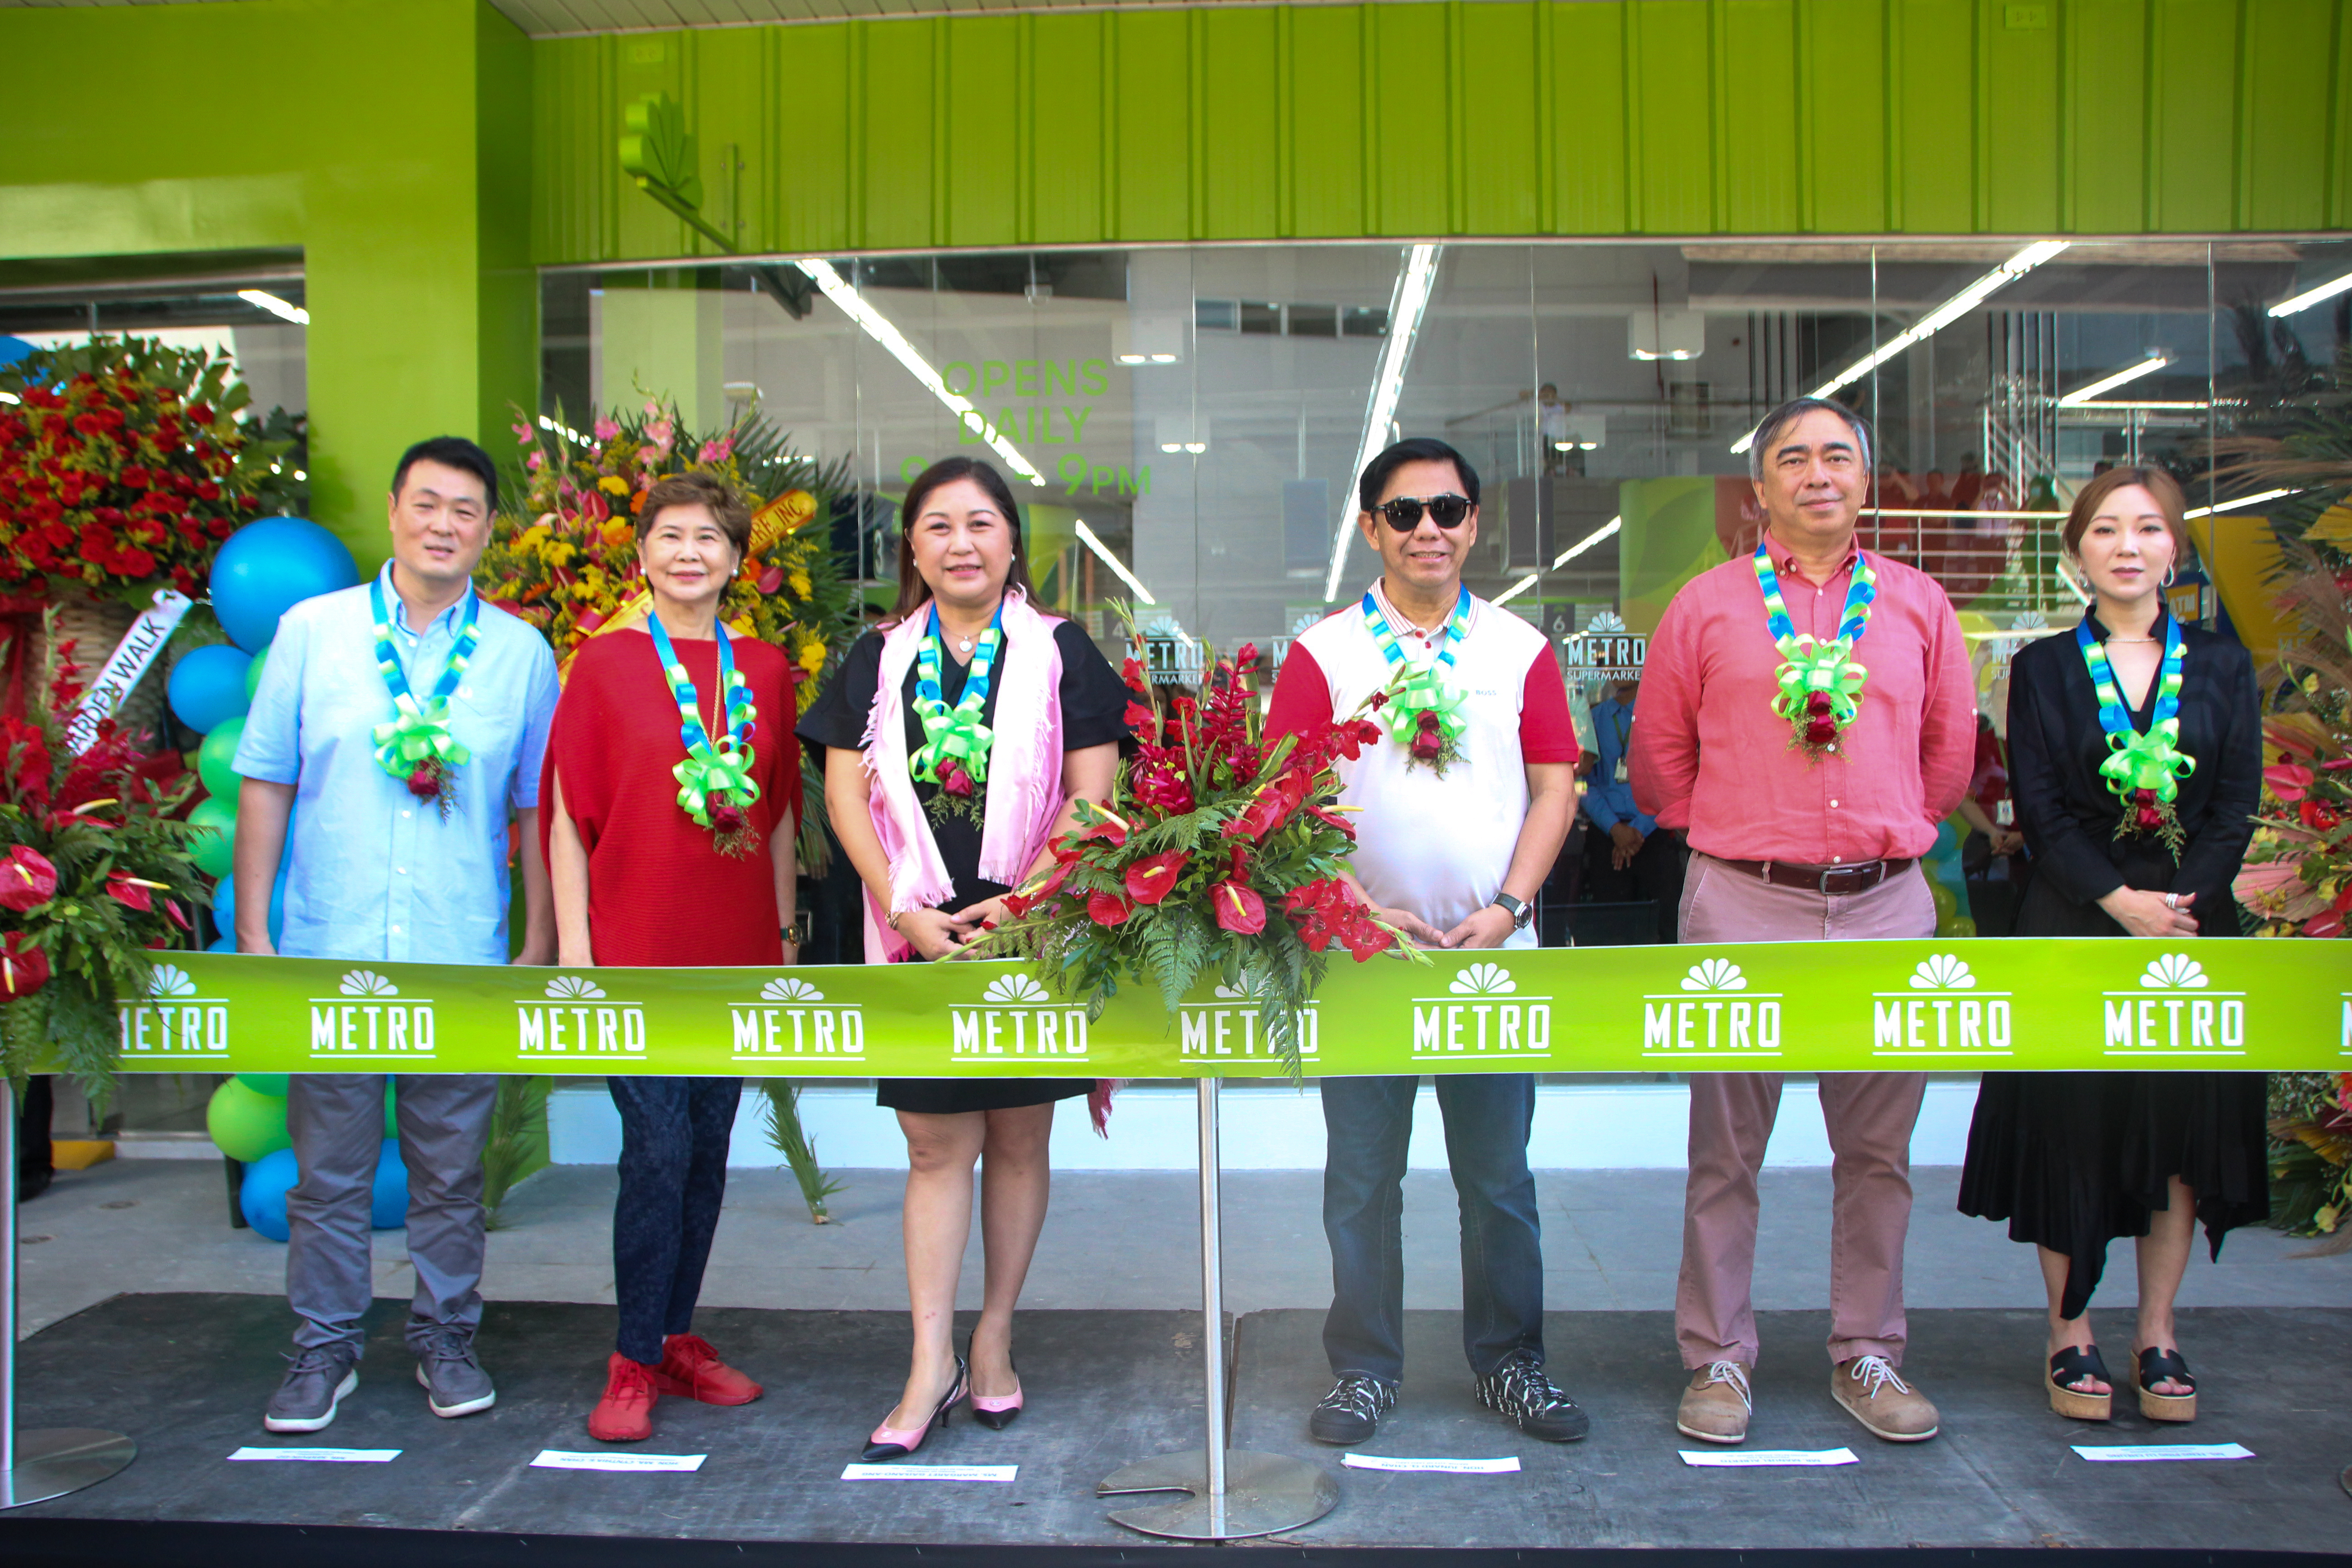 Another Metro Supermarket is opening in Lapu-Lapu